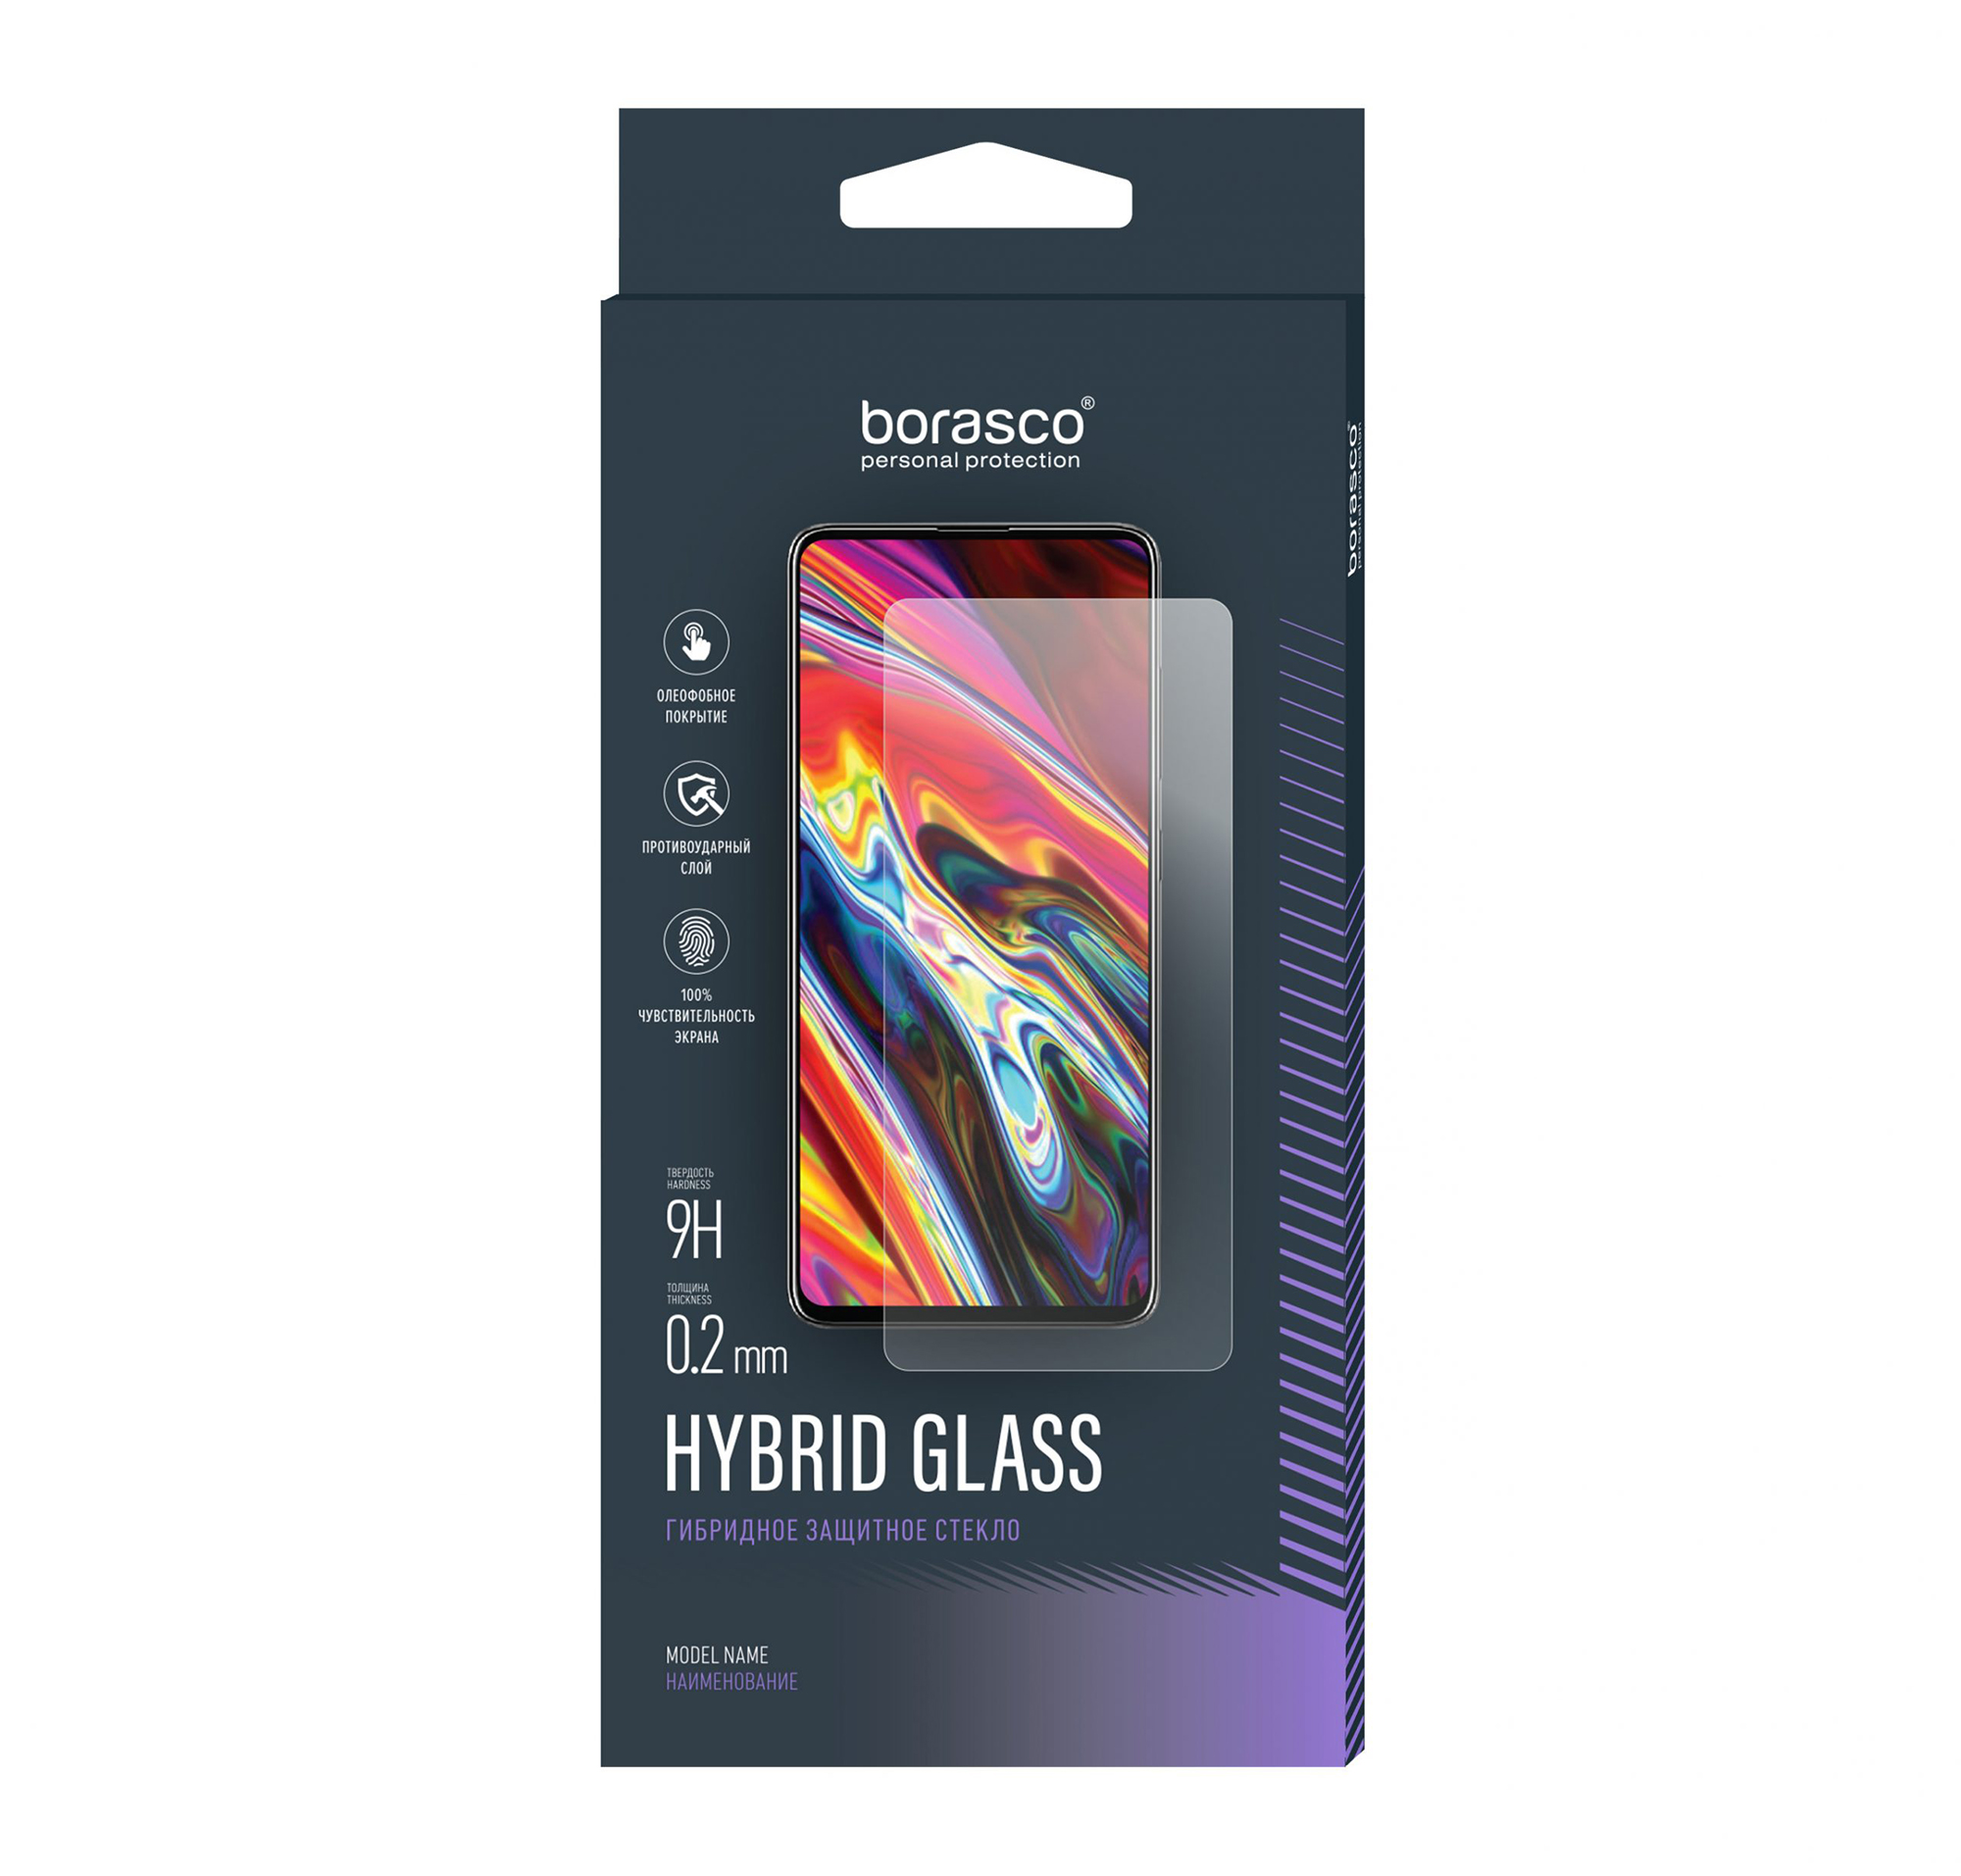 Защитное стекло Hybrid Glass для Realme C3/ 5/ 6i/ C11/ C15 защитное стекло borasco для realme c3 5 6i c11 c15 с20 c21 c21y c25 c25s с11 2021 0 26mm transparent 38844